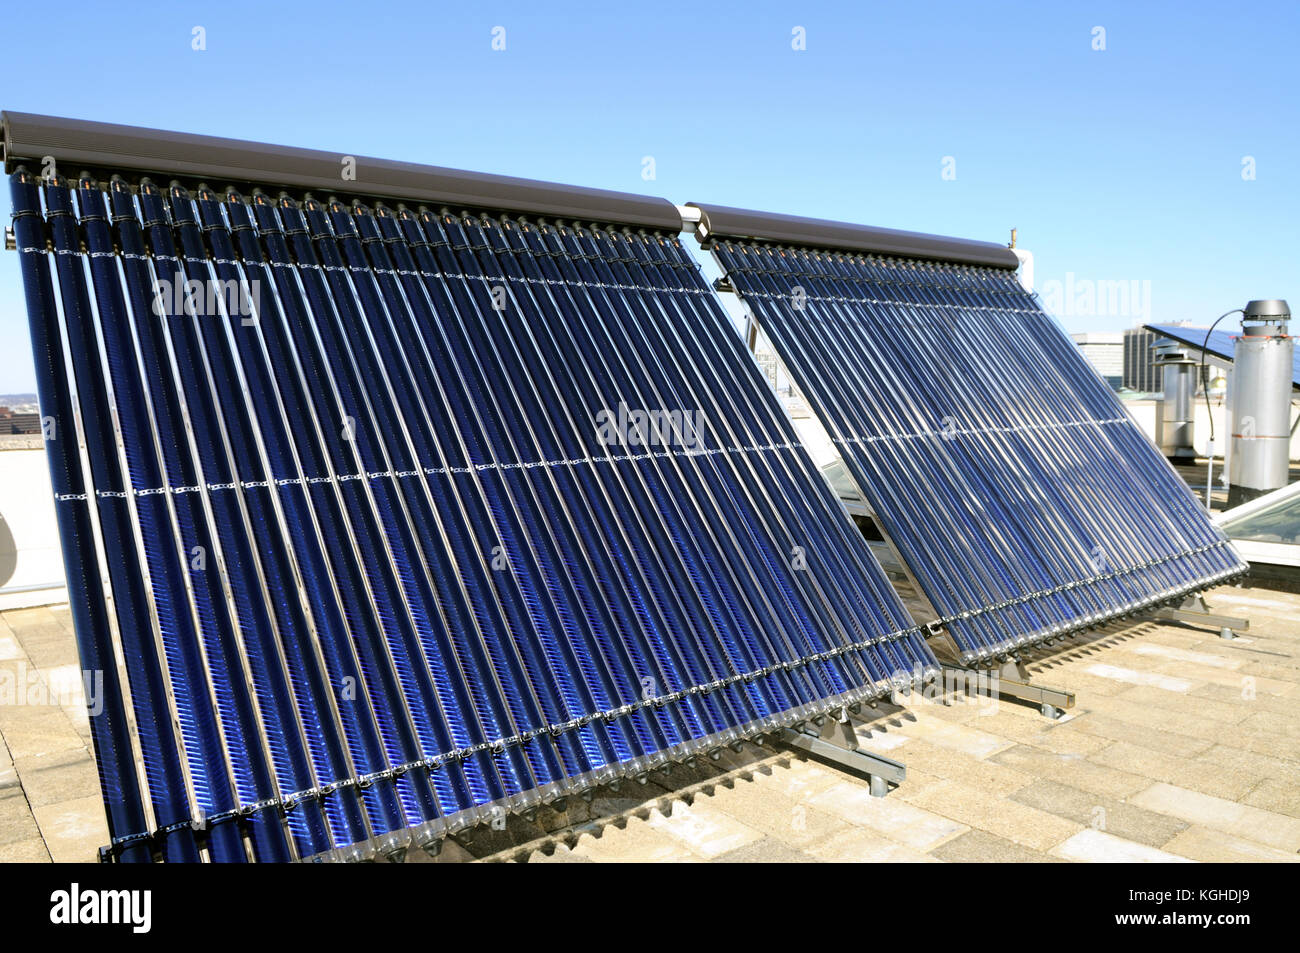 Vakuumröhrenkollektor Sonnenkollektor Sonnenkollektoren auf dem Dach  Stockfotografie - Alamy